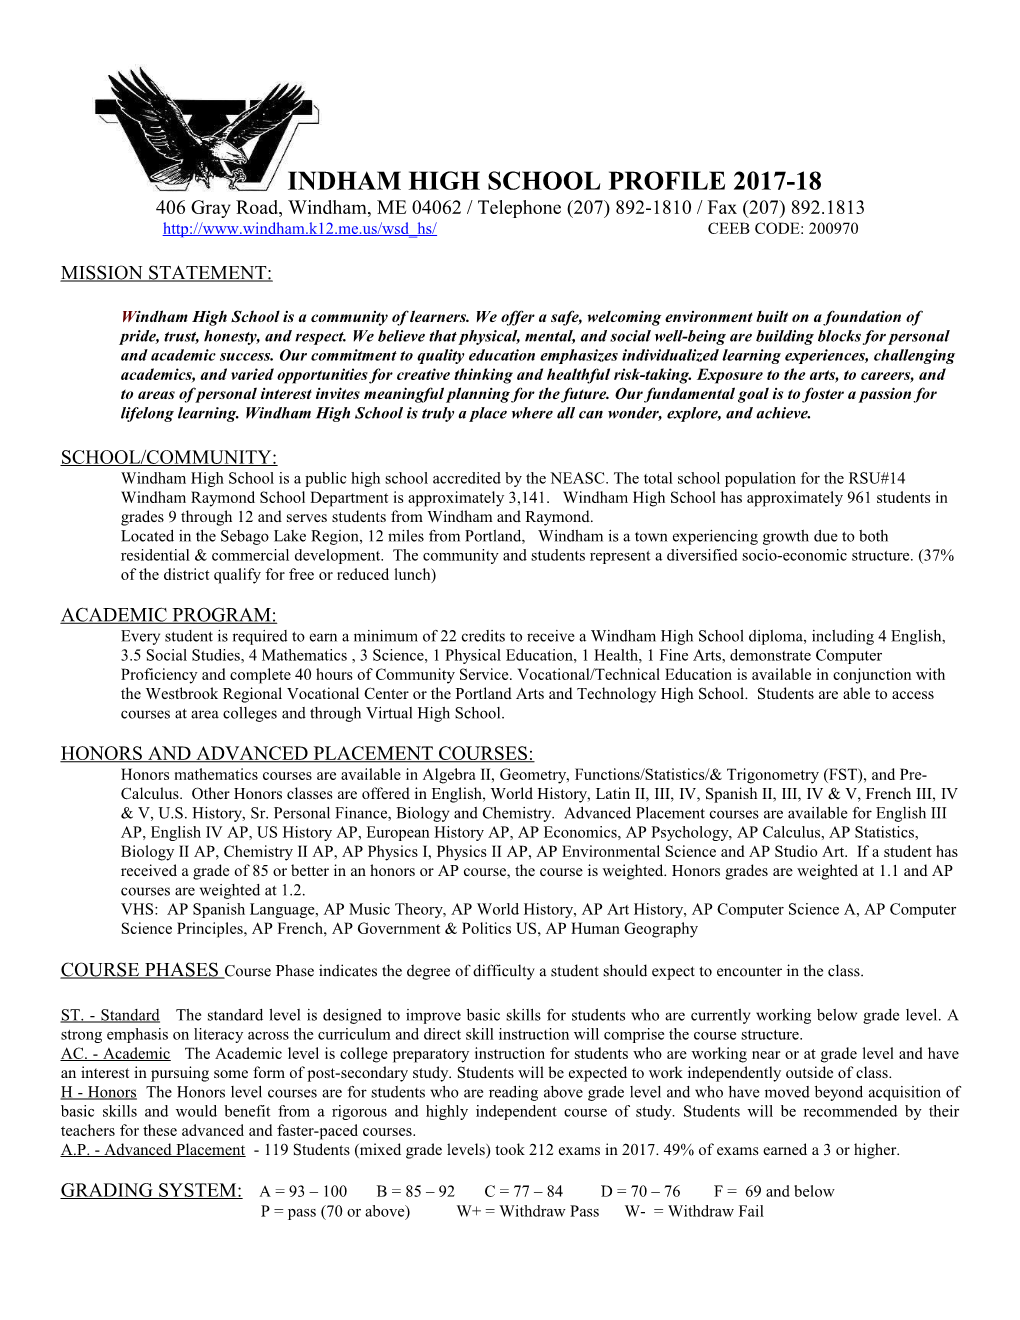 Indham High School Profile 2017-18